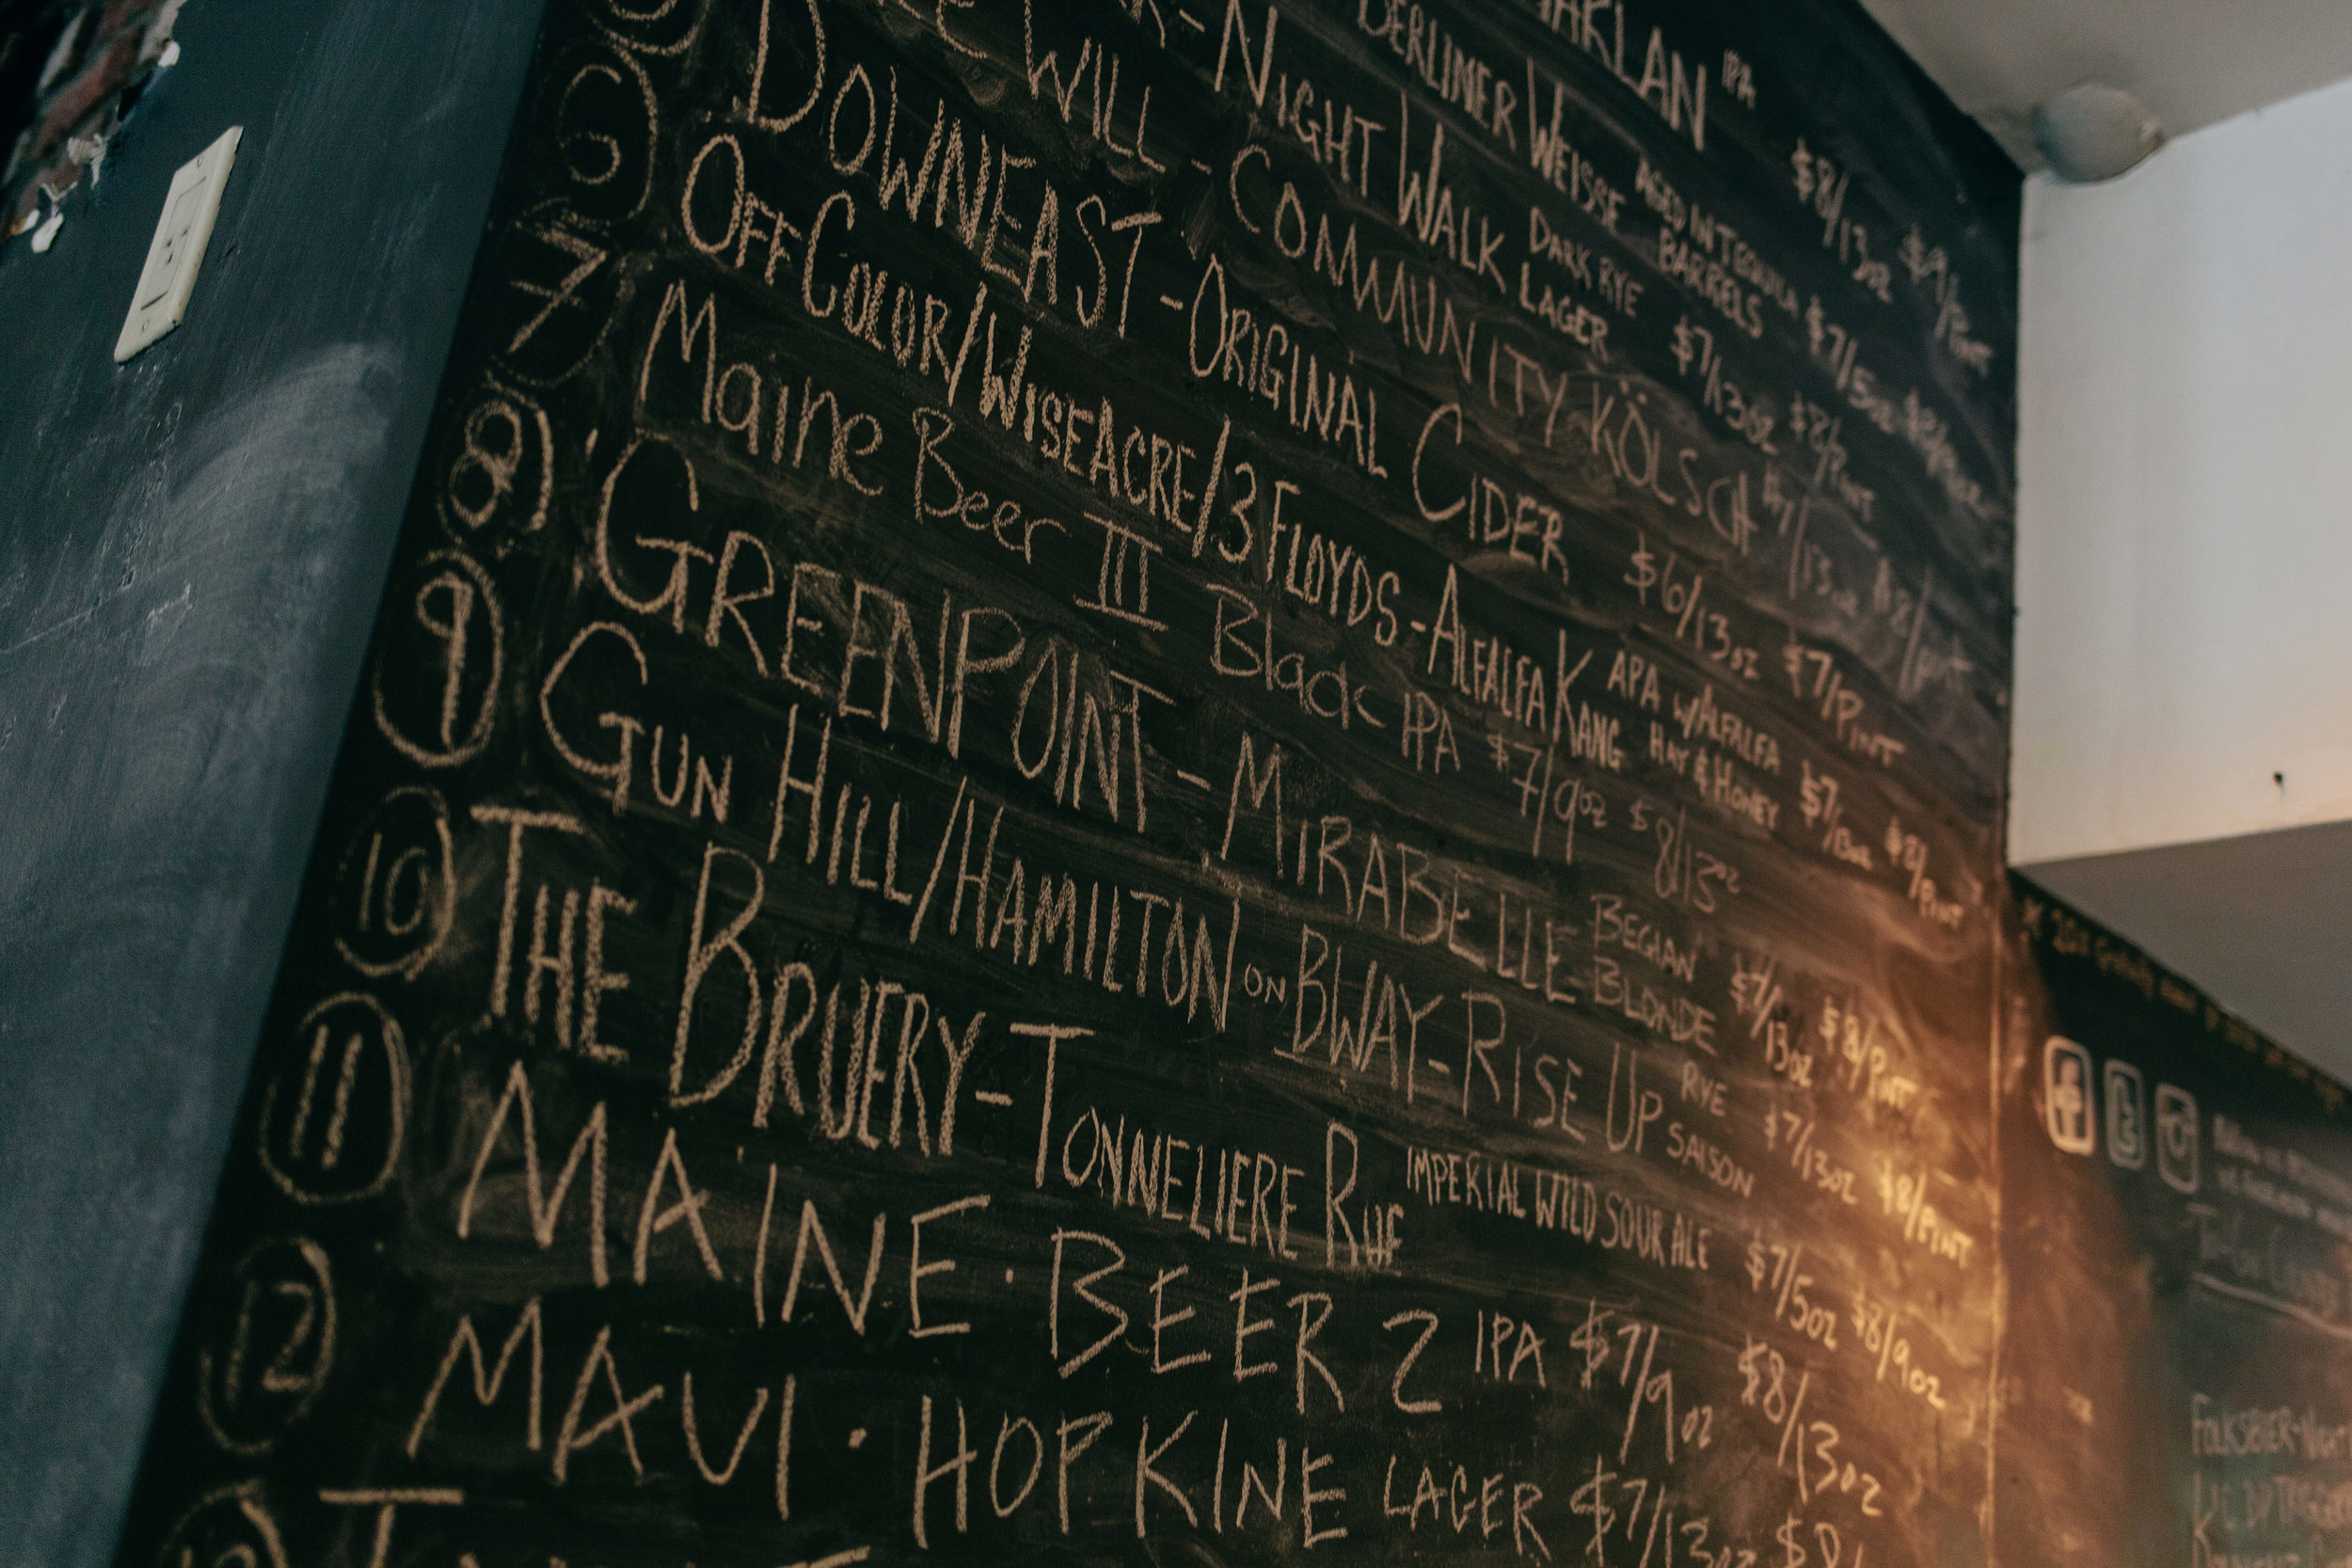 Beer list chalkboard